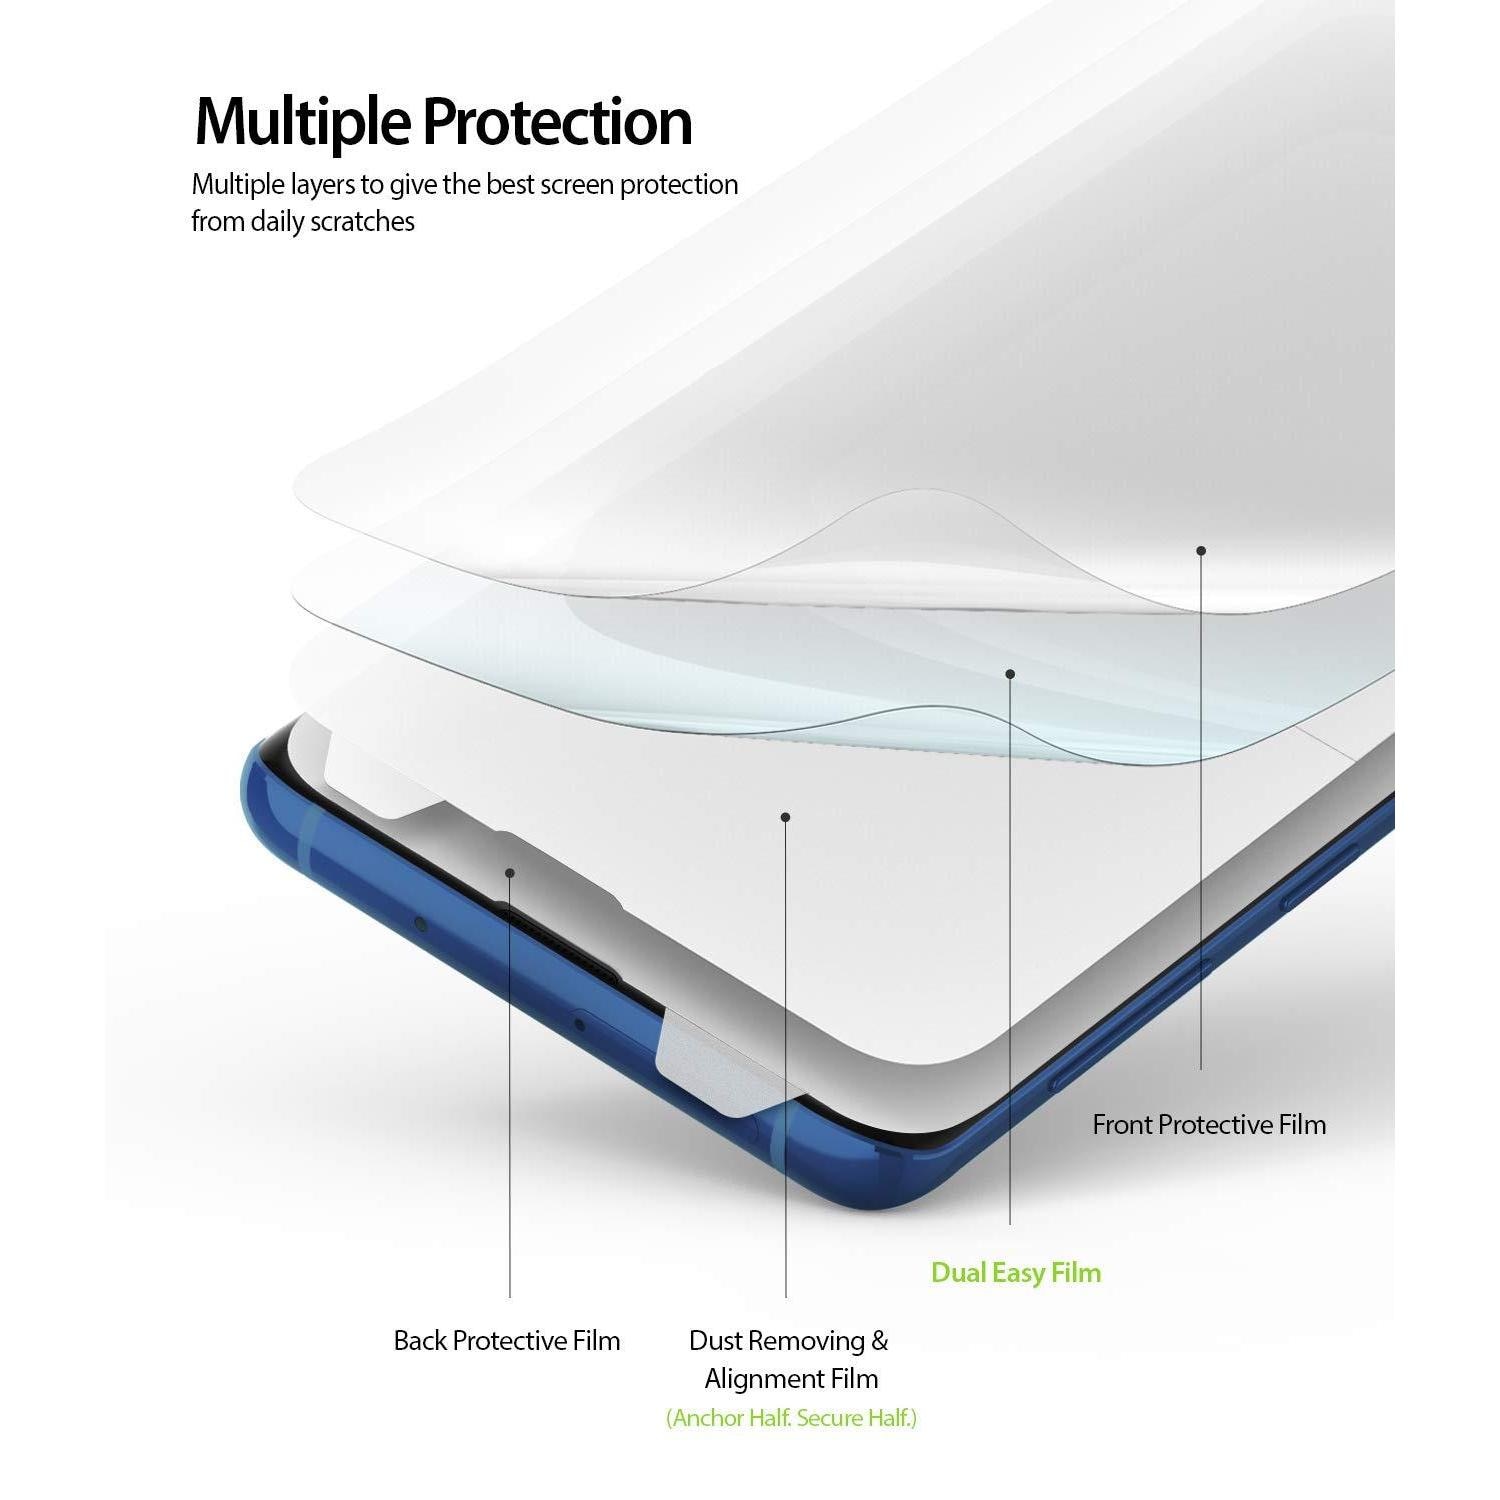 Dual Easy Screen Protector Galaxy S10 Plus